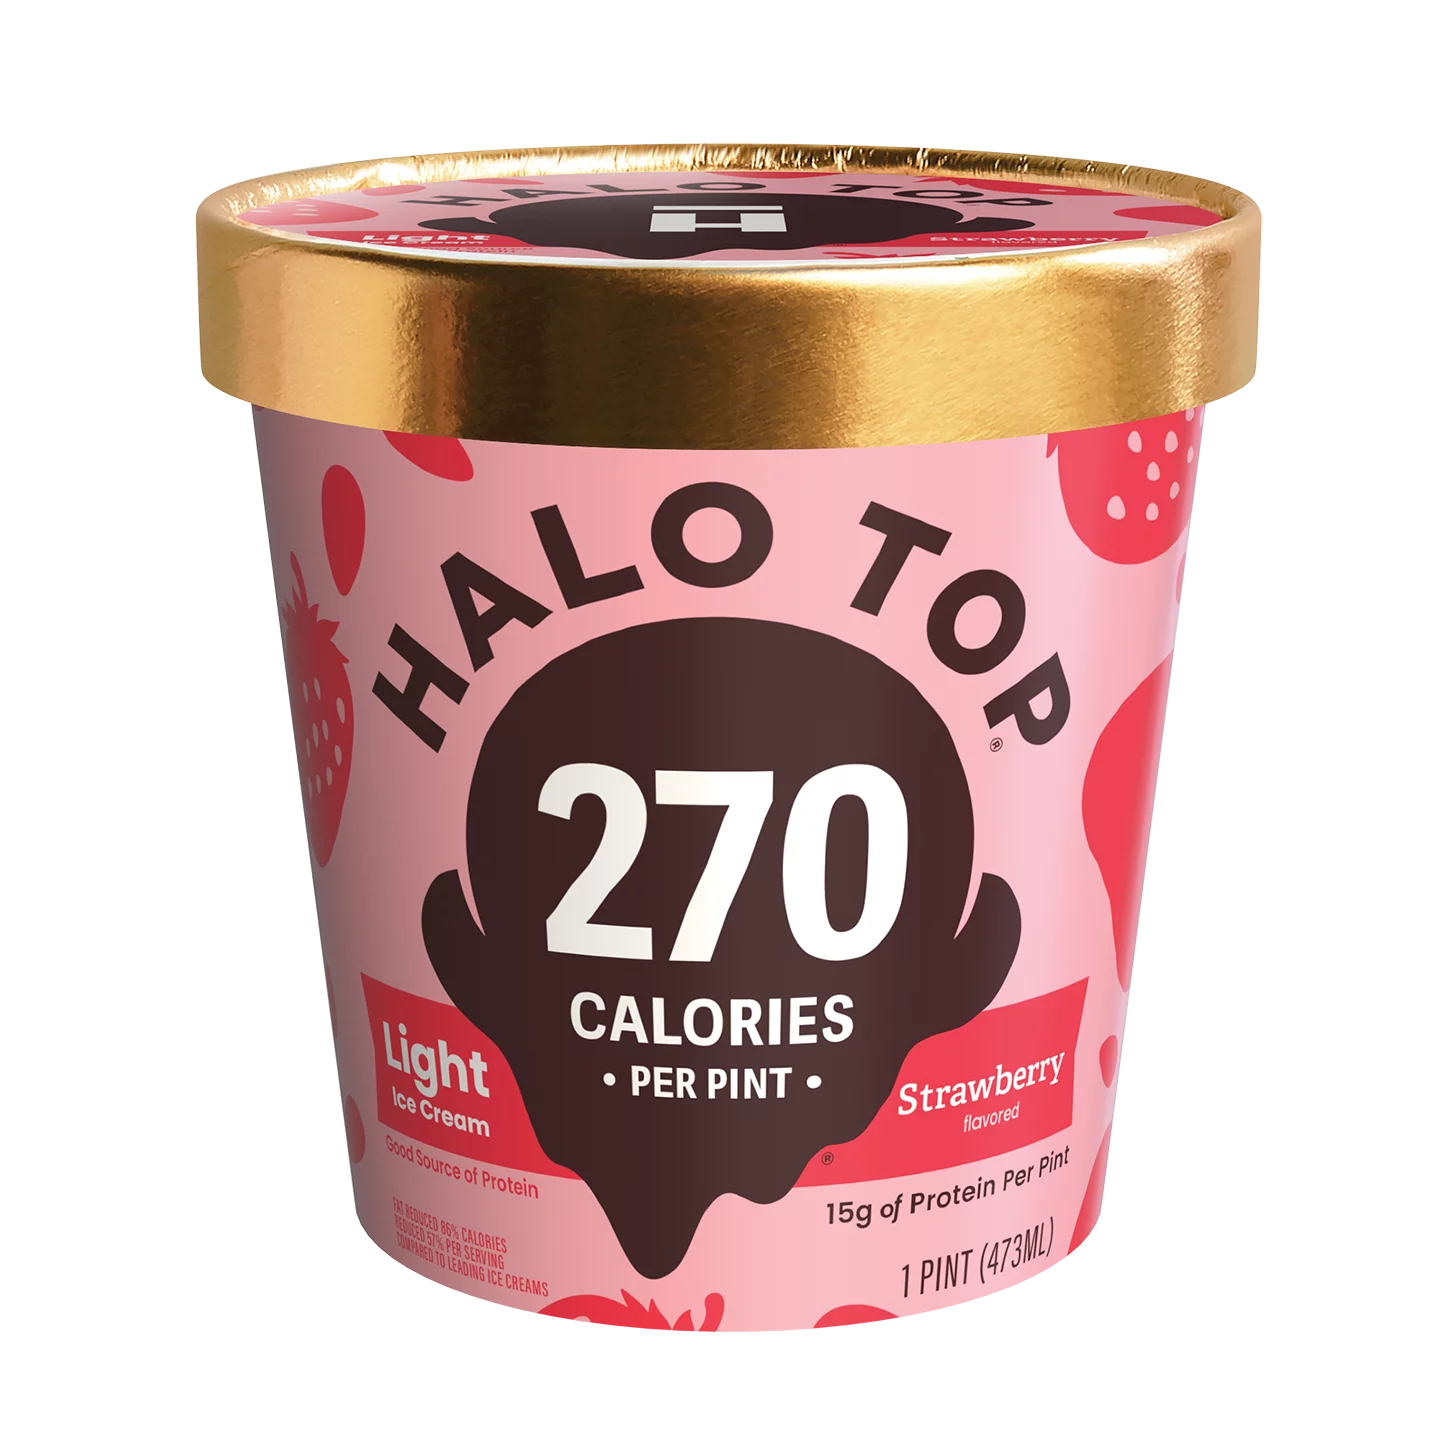 Halo Top Strawberry Light Ice Cream, 16 fl oz Pint